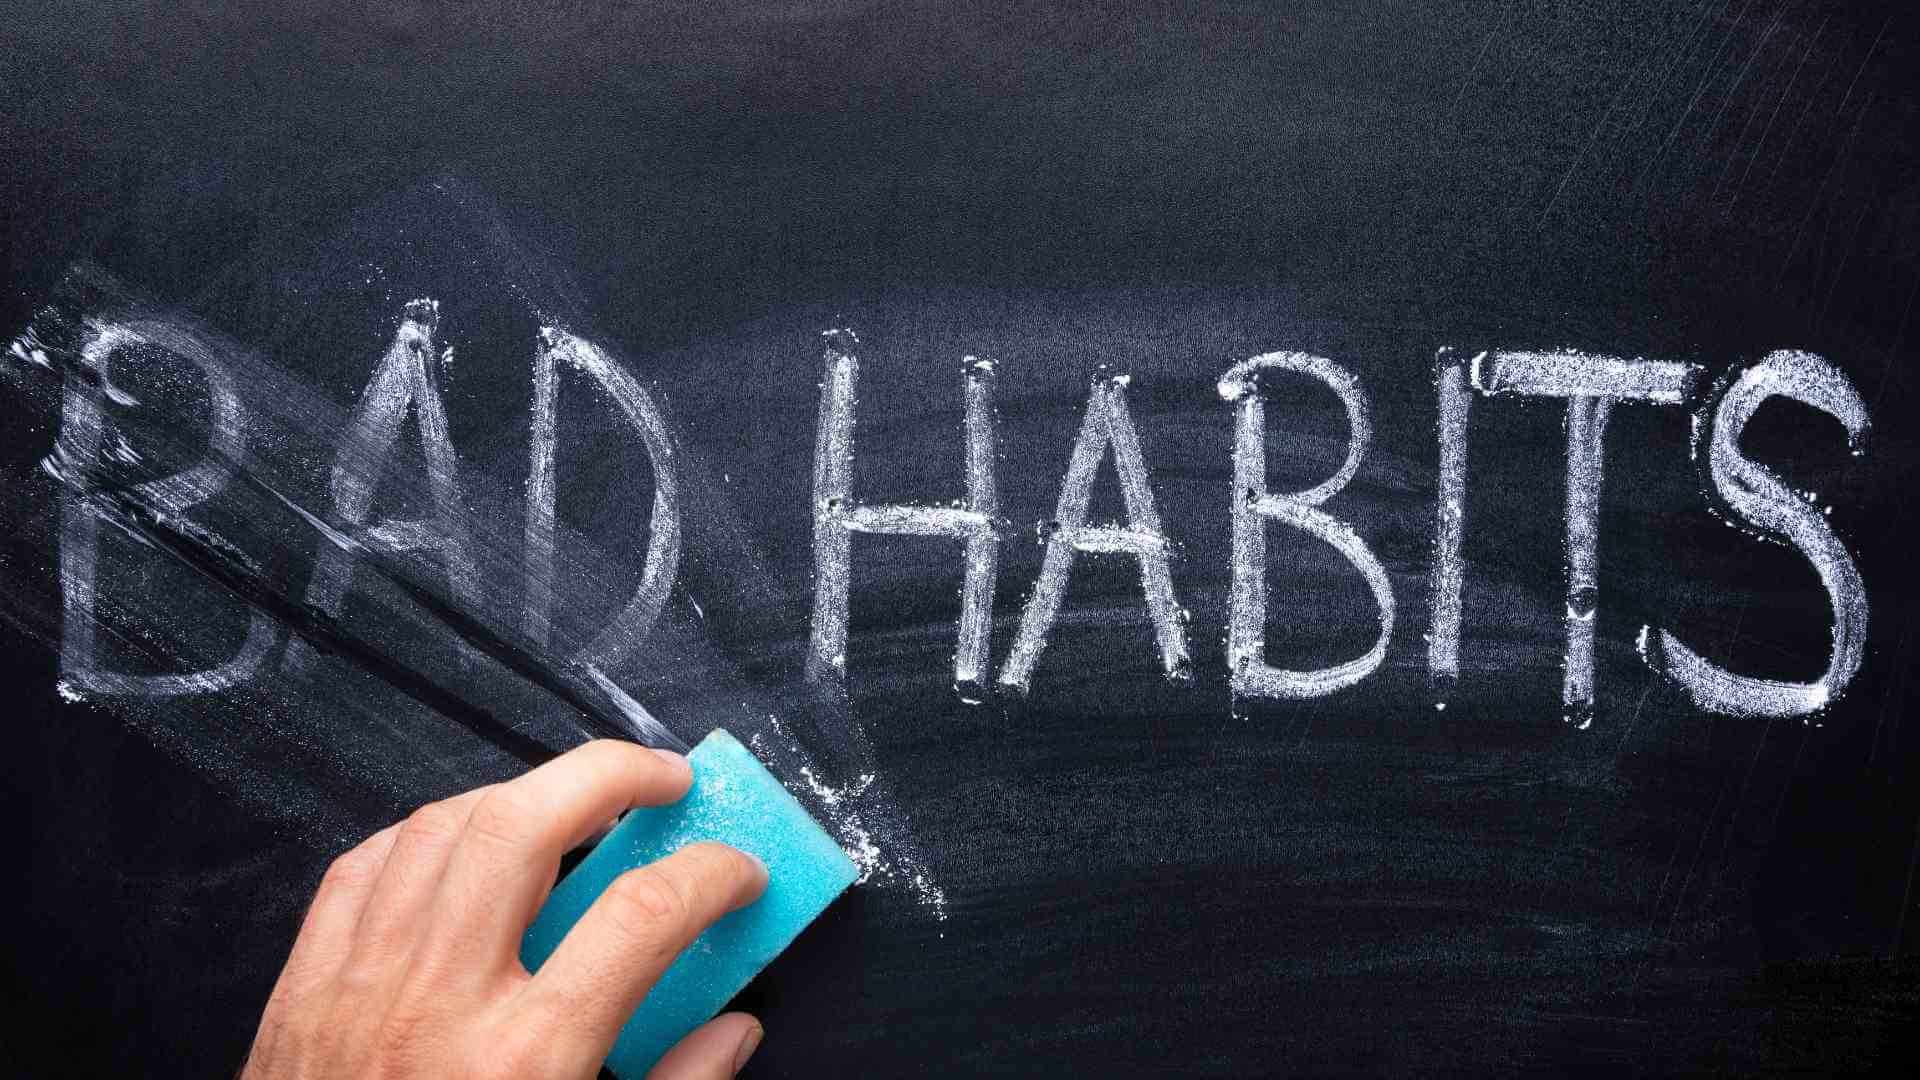 Erasing the word "bad habits" on a blackboard